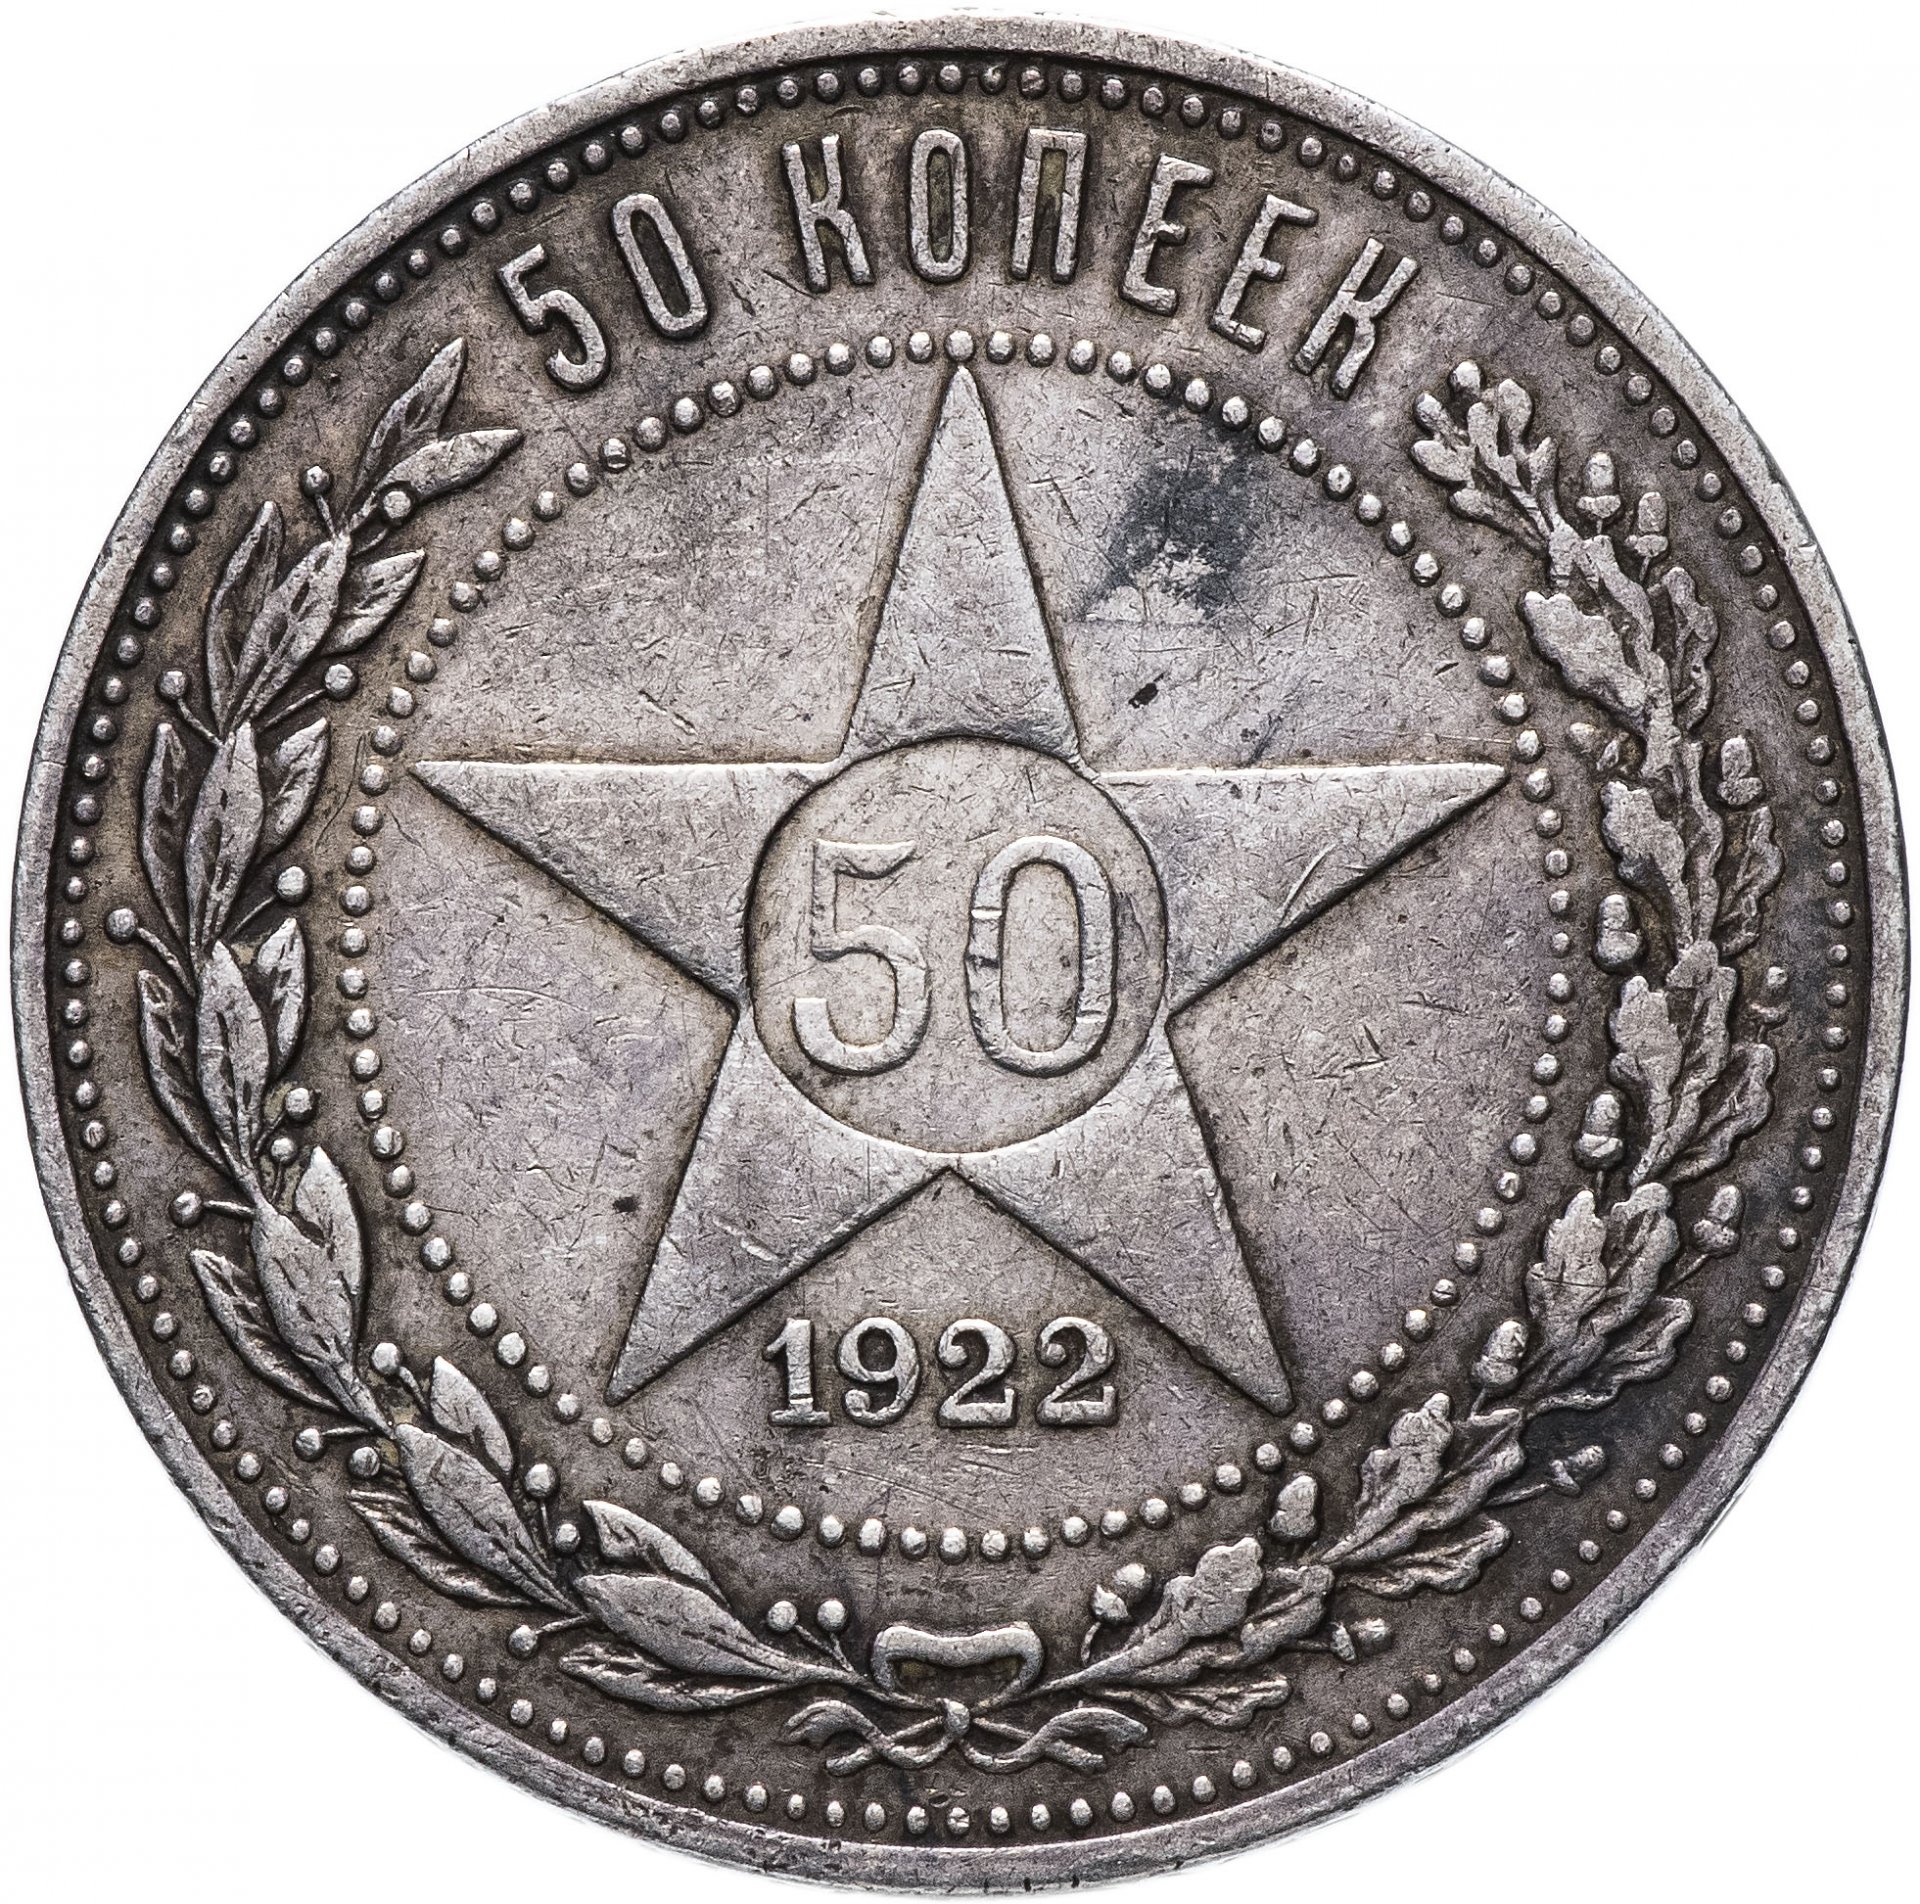 50 копеек 1922 года серебро. 50 Копеек 1922. Рубль 1921. Монета 50 рублей 1922. 5 Коп 1922.